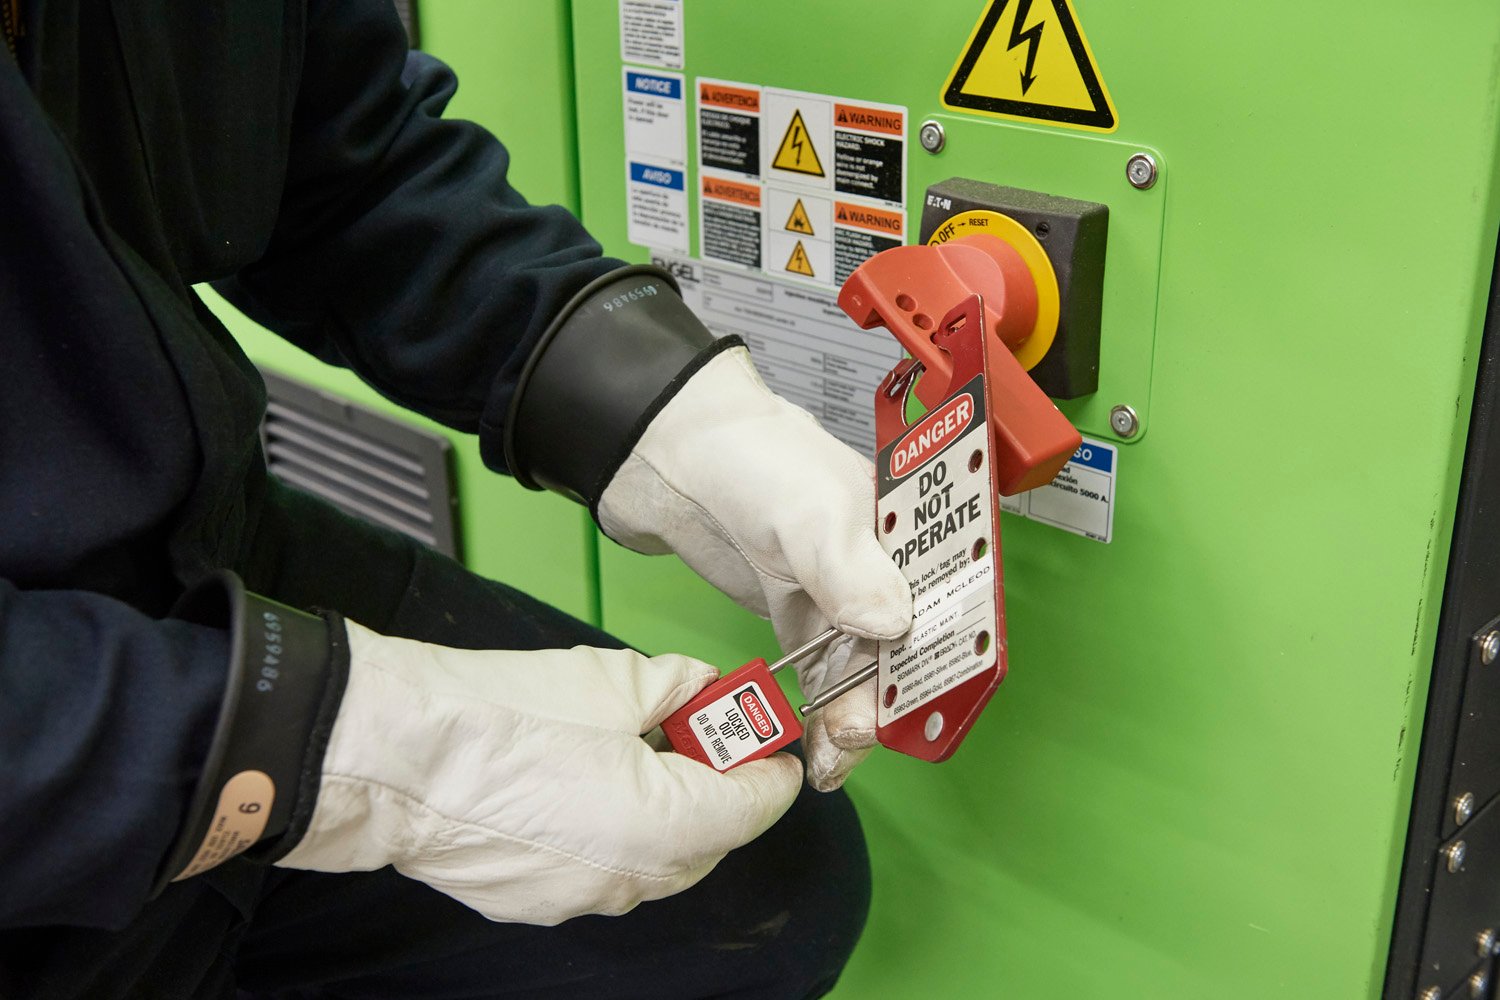 Worker locking equipment as a safety procedure